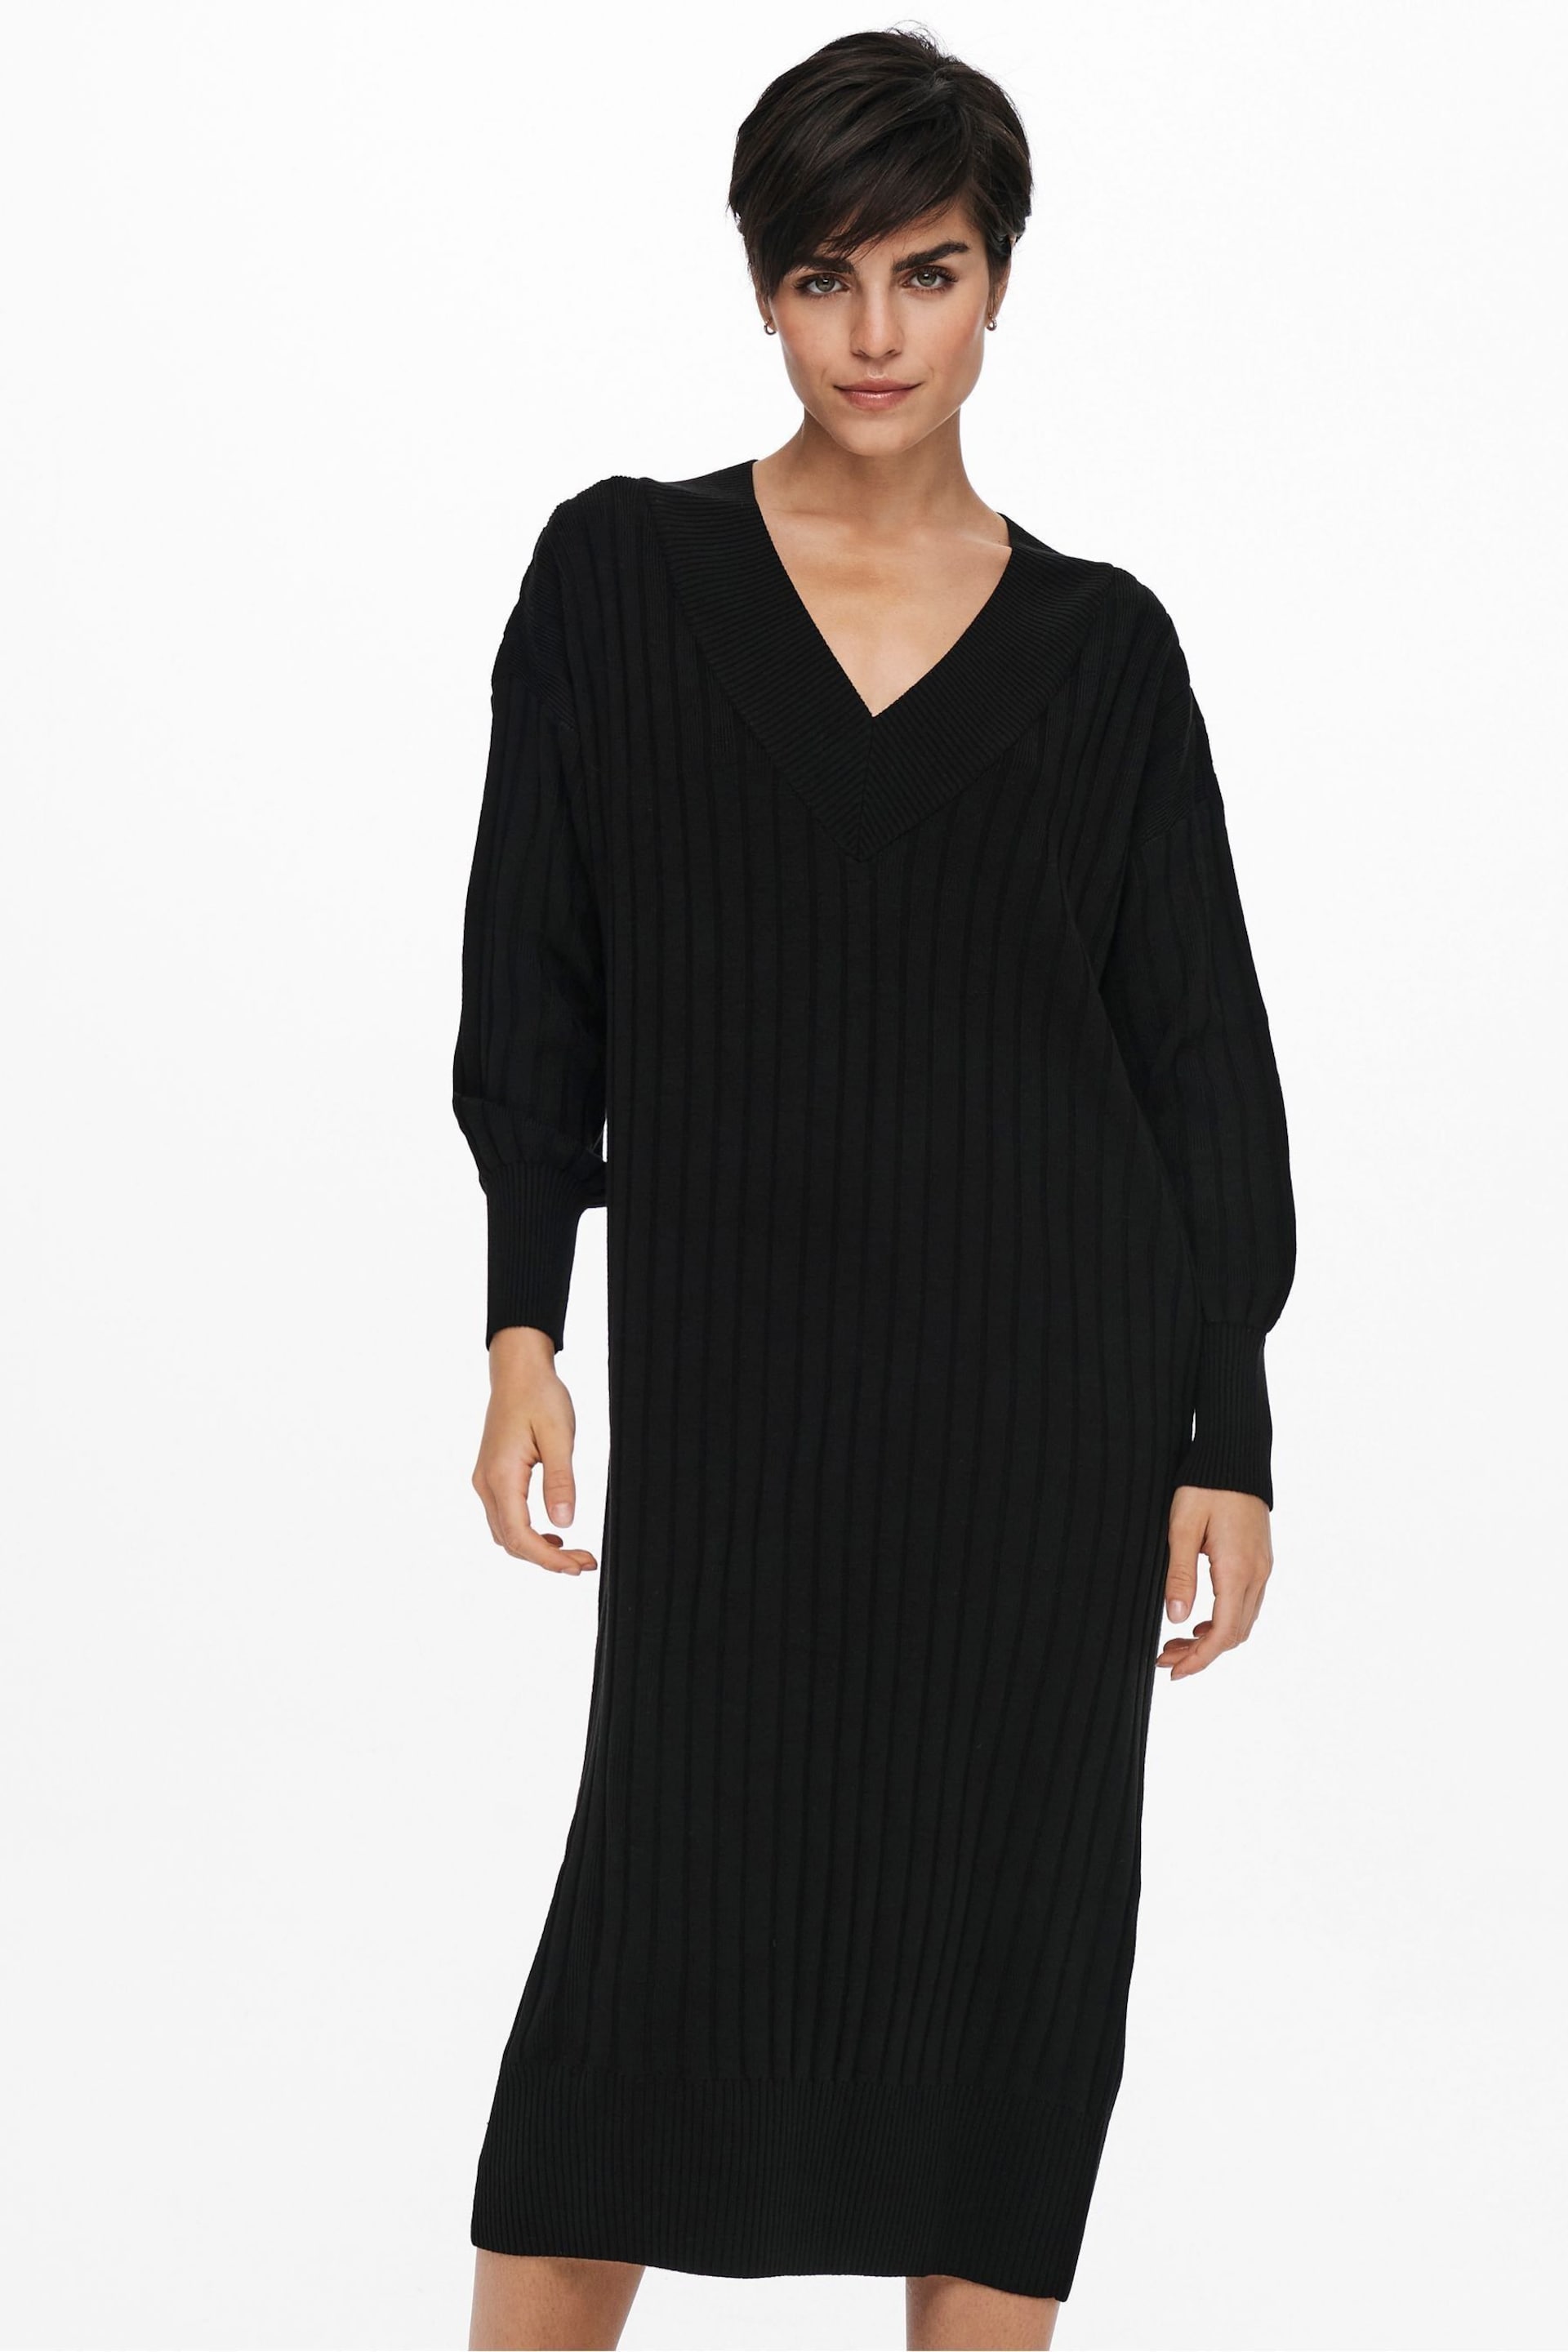 ONLY Black V-Neck Midi Knitted Jumper Dress - Image 1 of 6